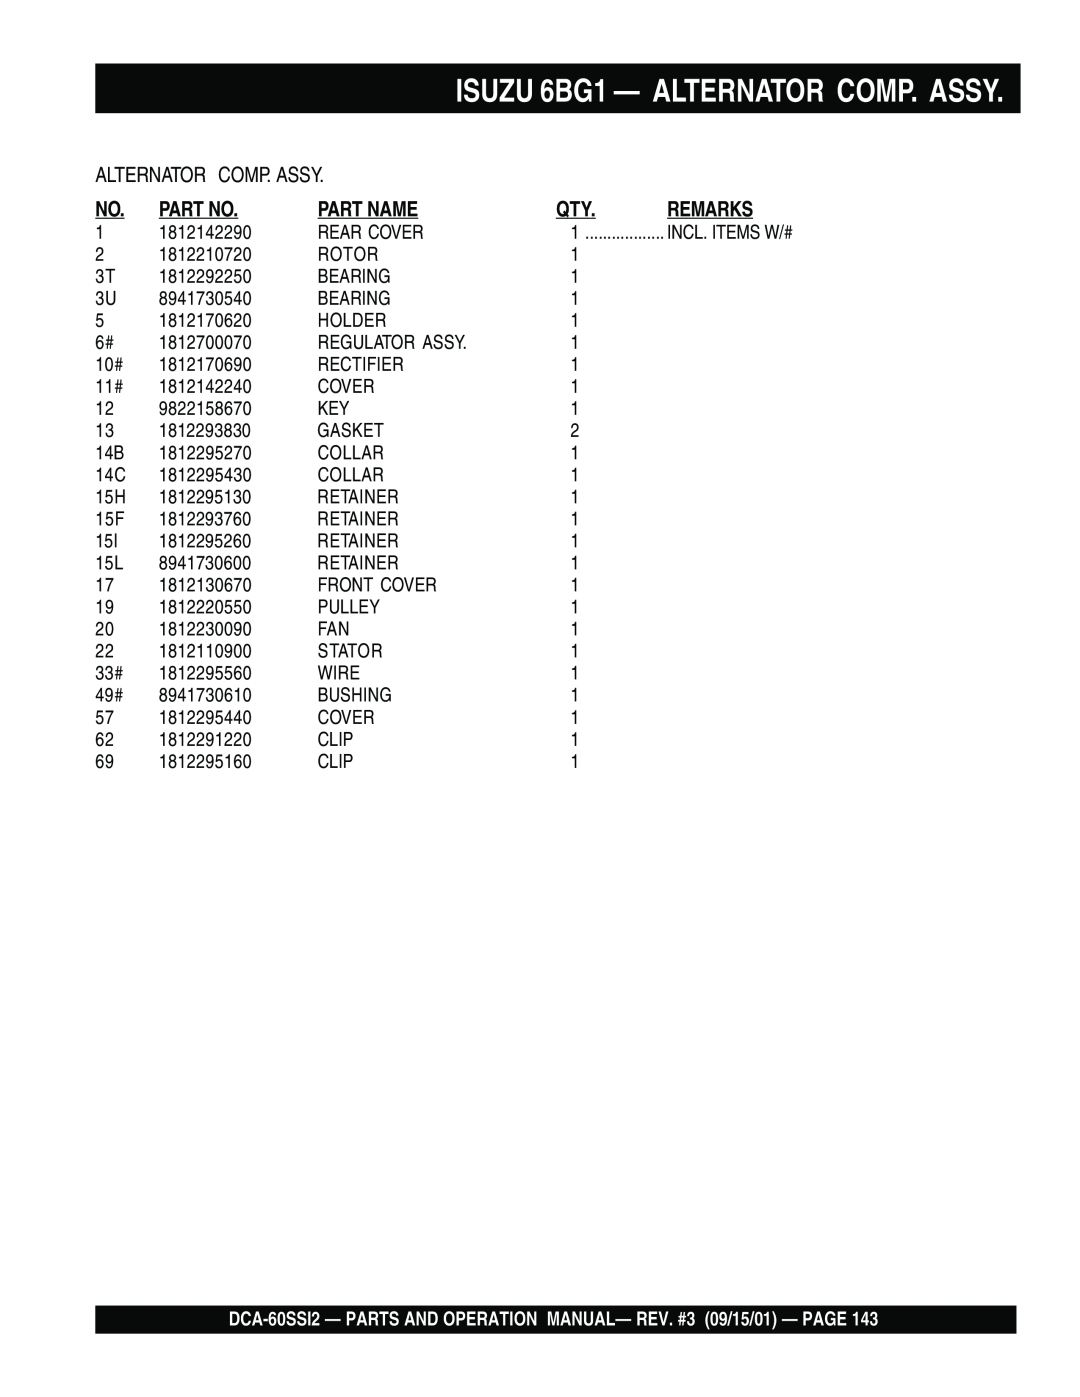 Multiquip DCA-60SS12 operation manual ISUZU 6BG1 — ALTERNATOR COMP. ASSY, Part No, Part Name, Remarks, 1812142290 